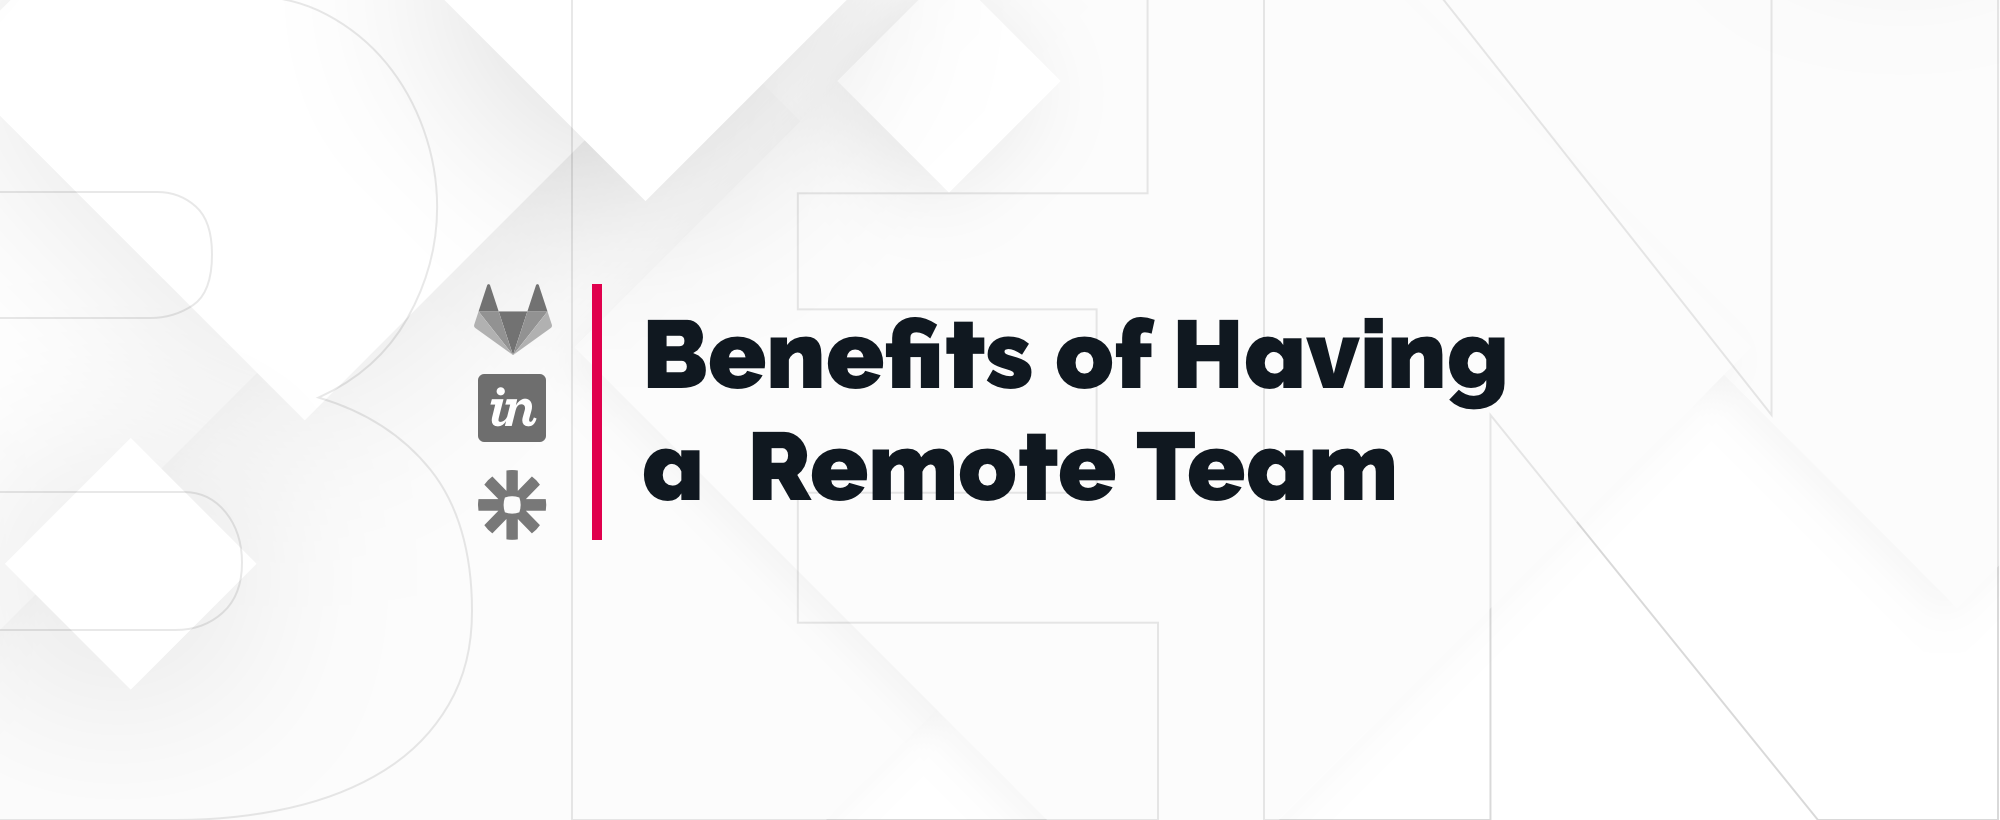 Benefits of Having a Remote Team: Gitlab, InVision, Zapier cases.